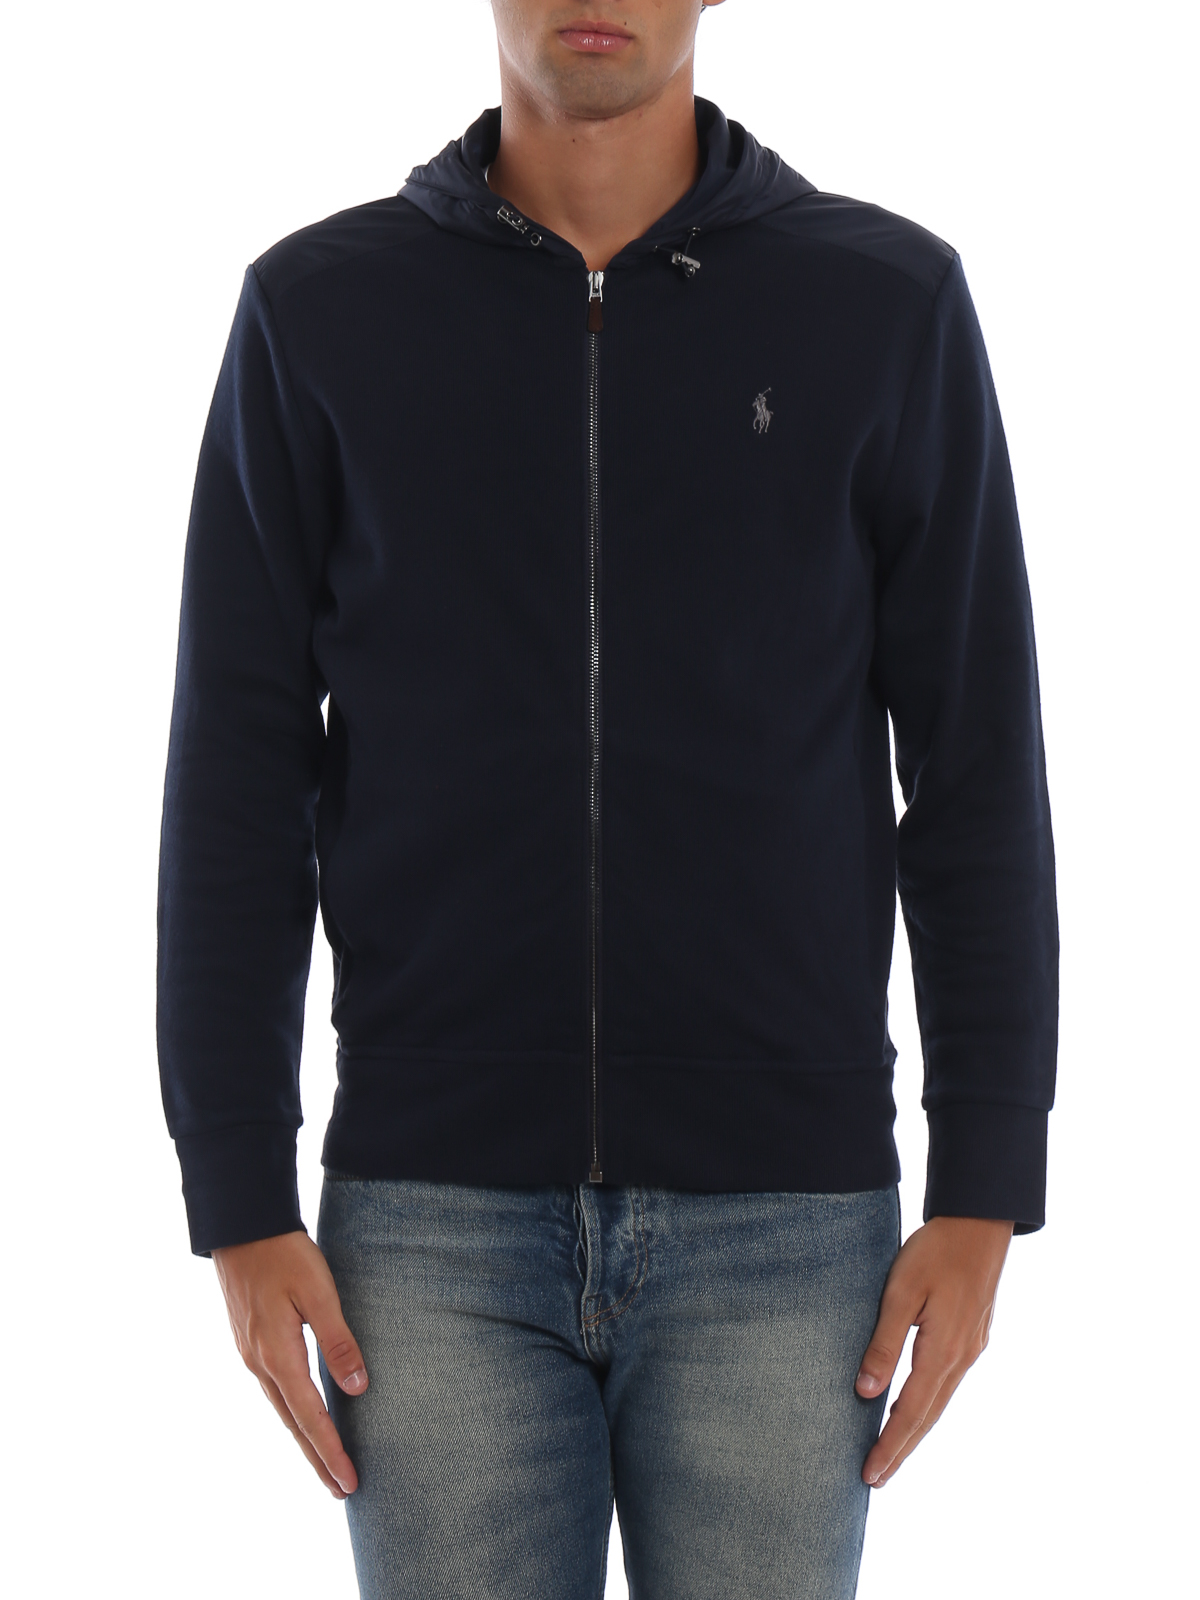 Sweatshirts & Sweaters Polo Ralph Lauren - Navy blue cotton and nylon hoodie  - 710671890002